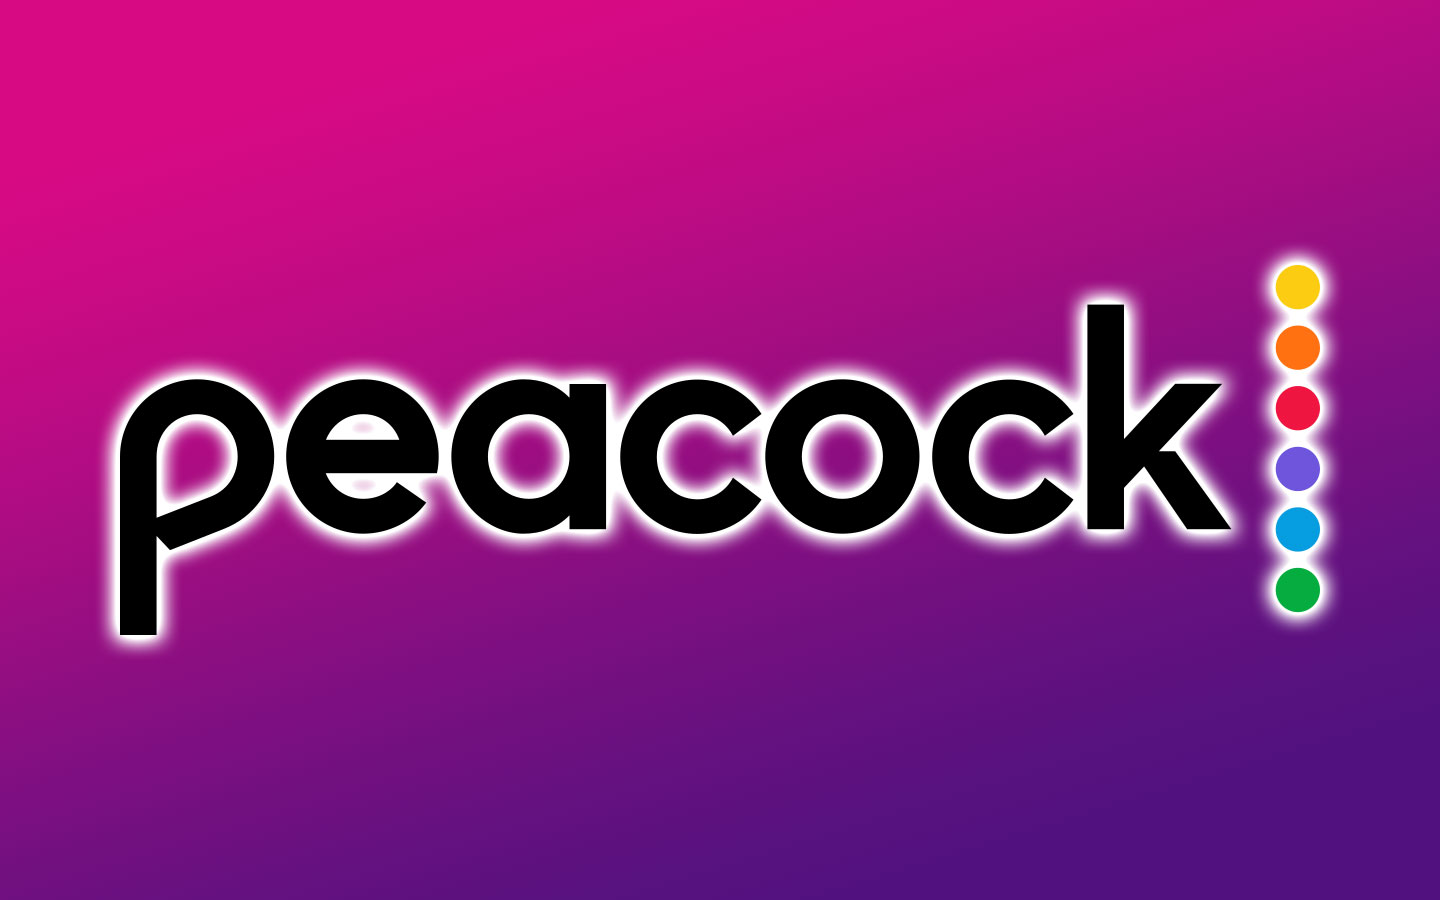 Peacock Roku free Channel List